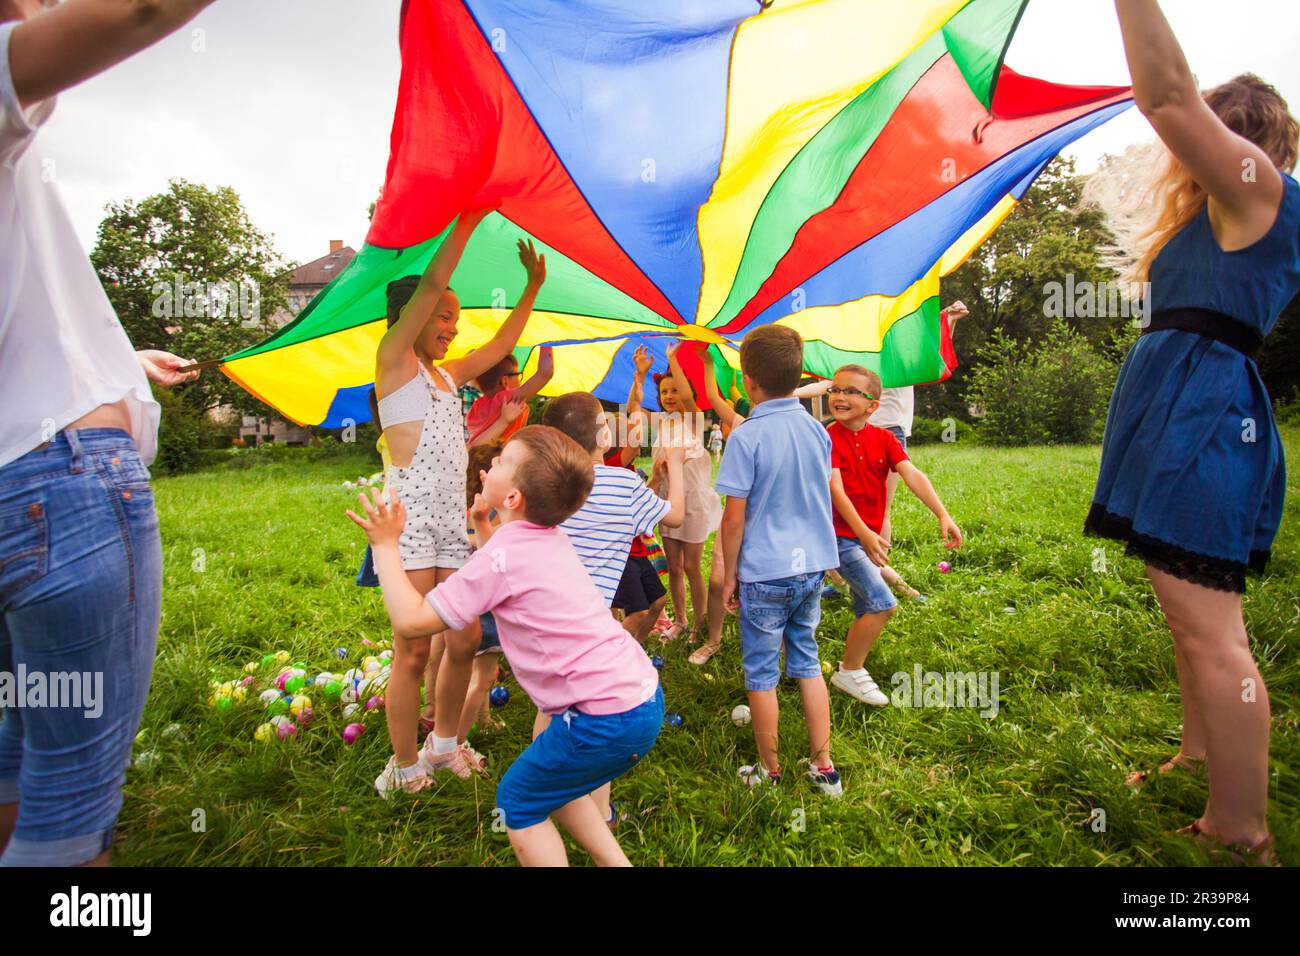 Kids hide under rainbow parachute outdoors game Stock Photo